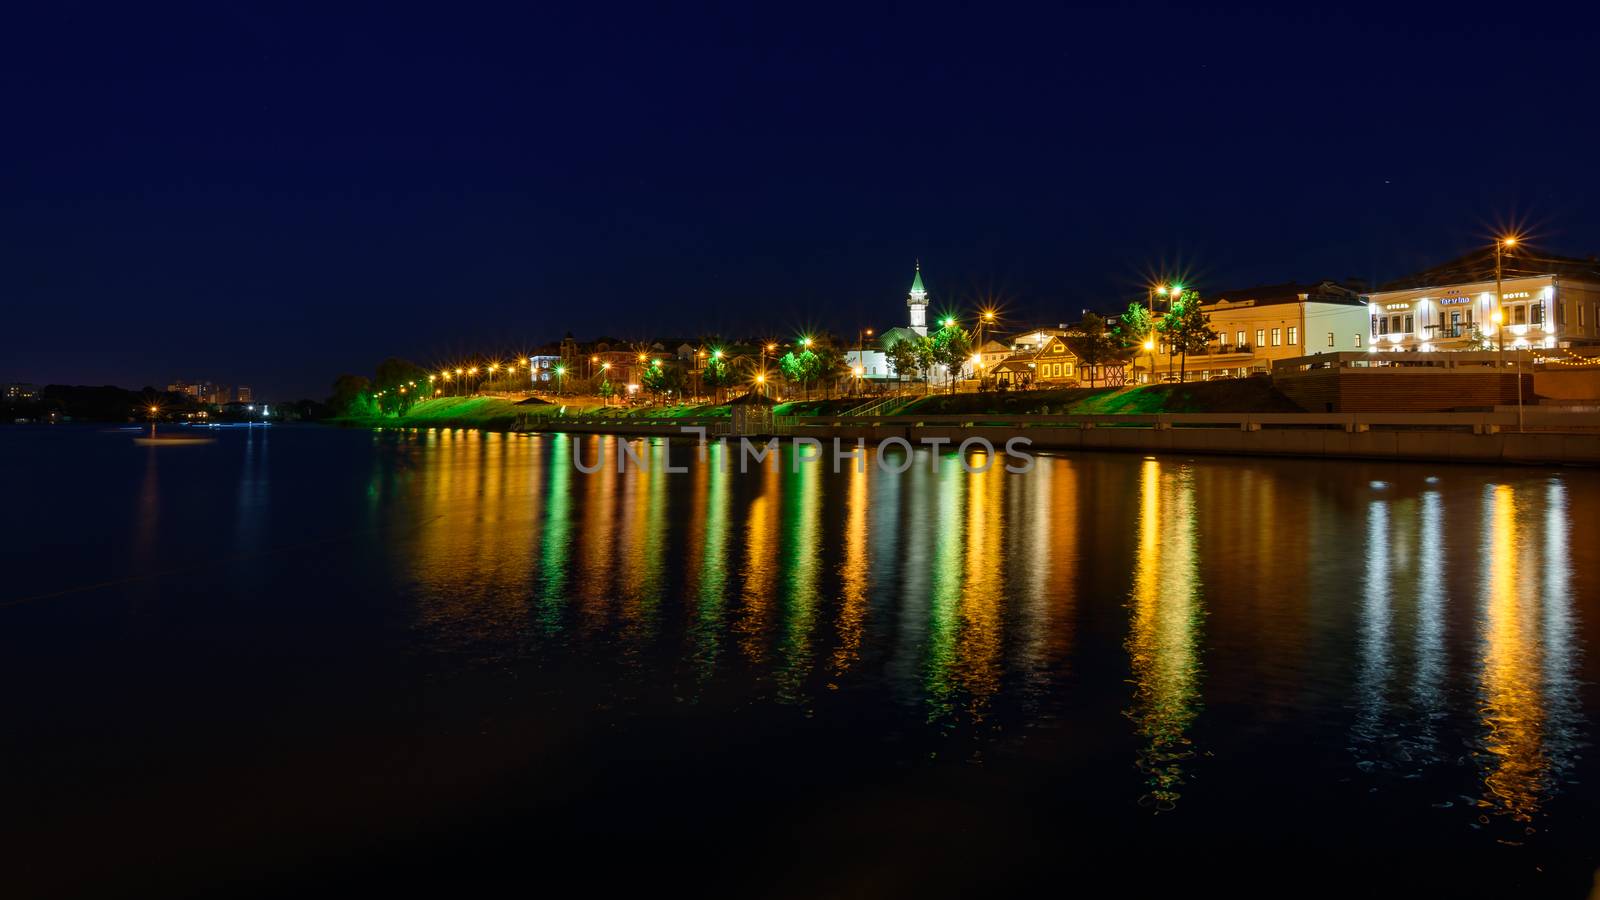 The city of Kazan during a beautiful summer night with multicolor illumination by Seva_blsv